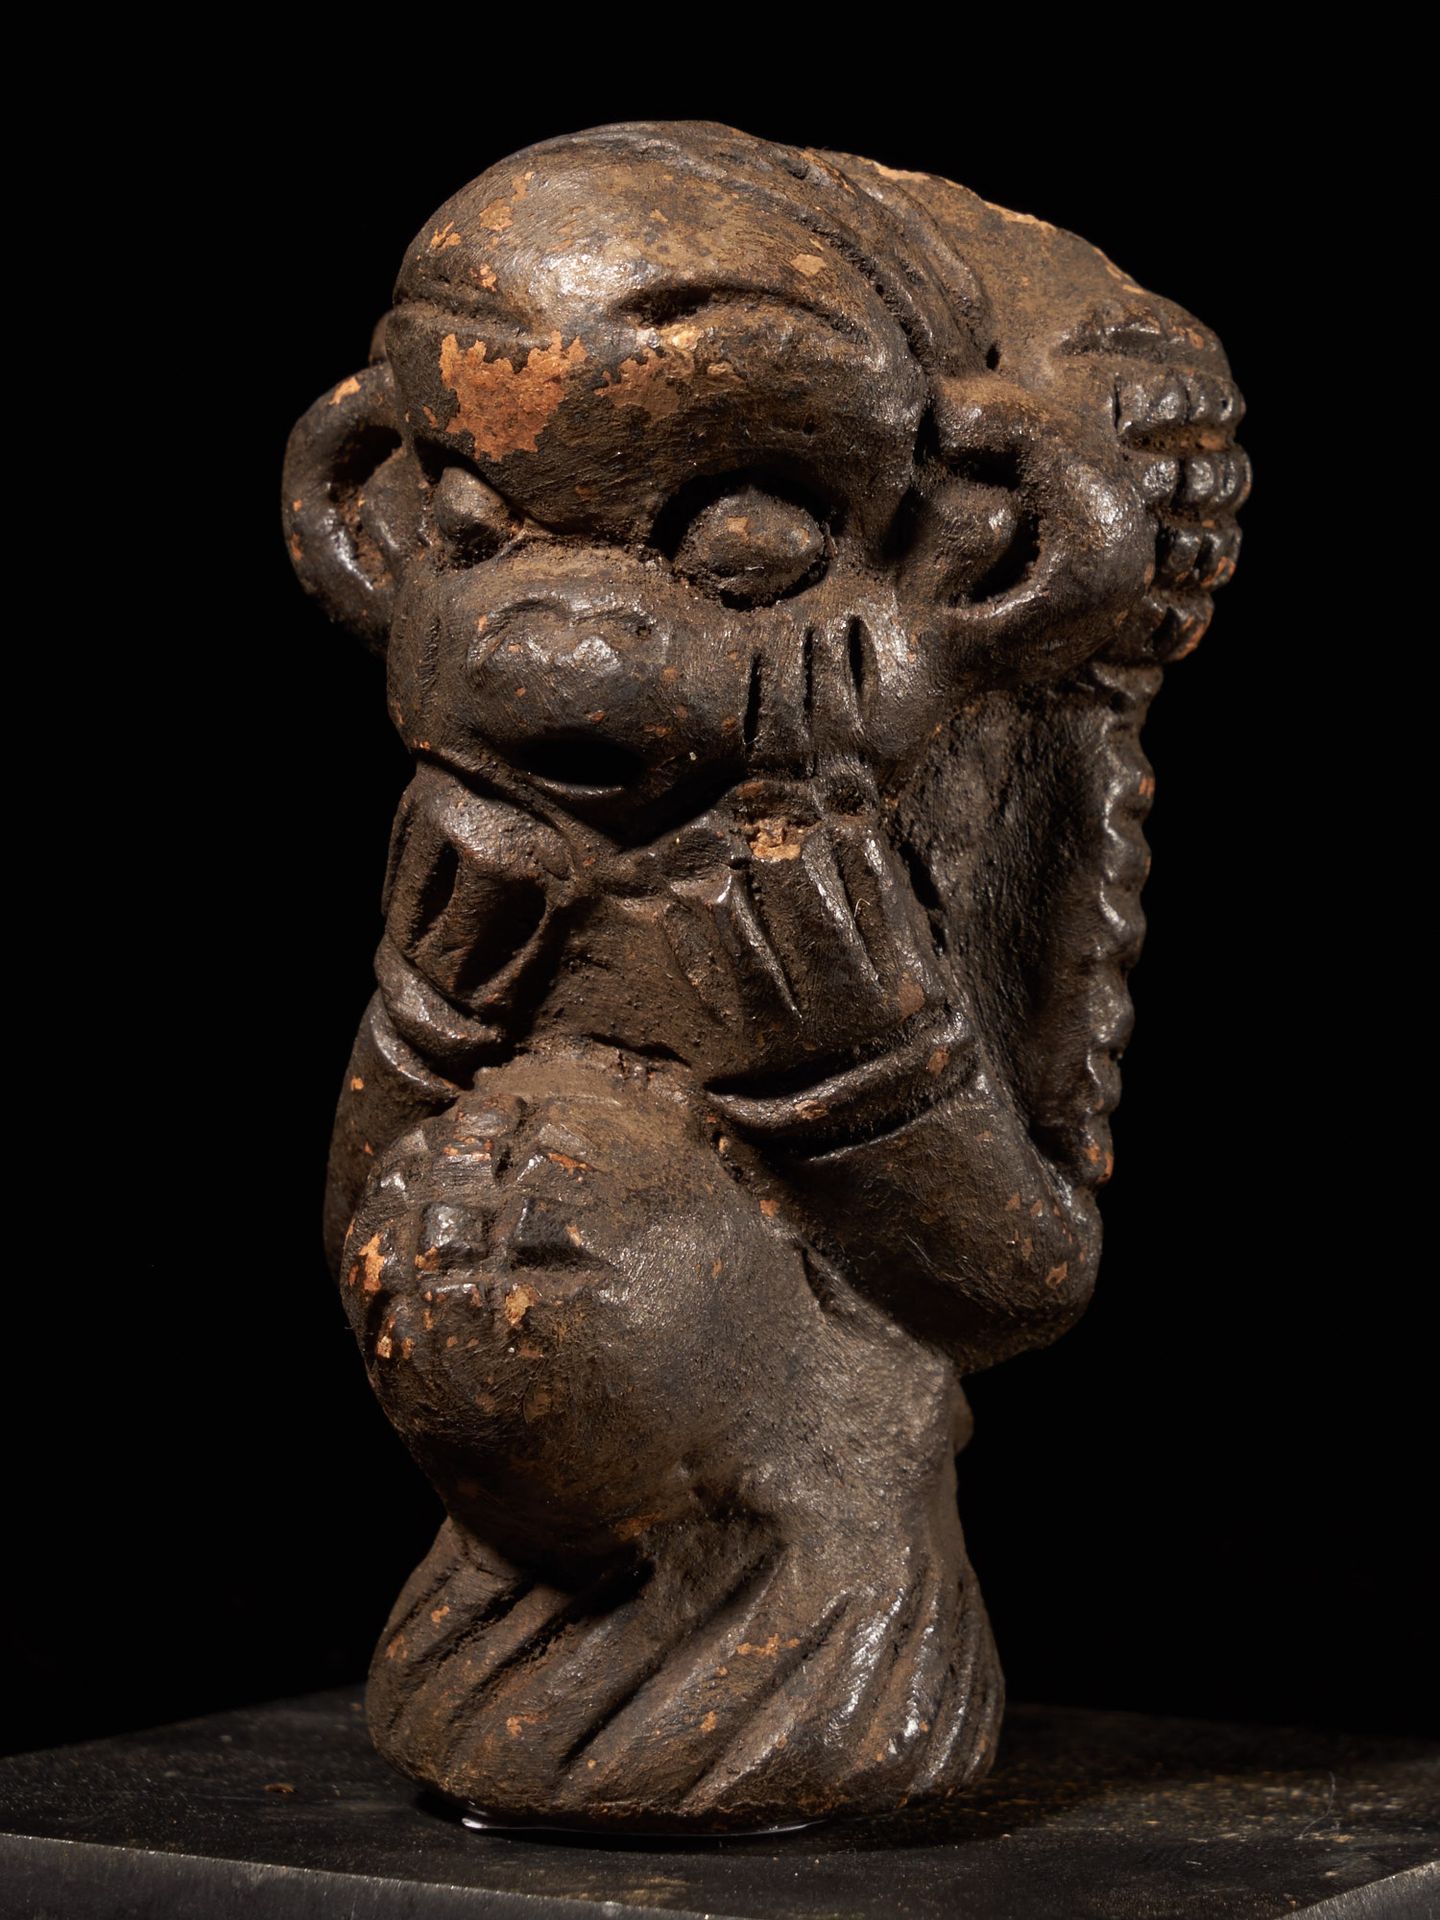 Peuple tikar 喀麦隆Tikar人的陶瓷烟斗 - 8.5*5*7.5厘米